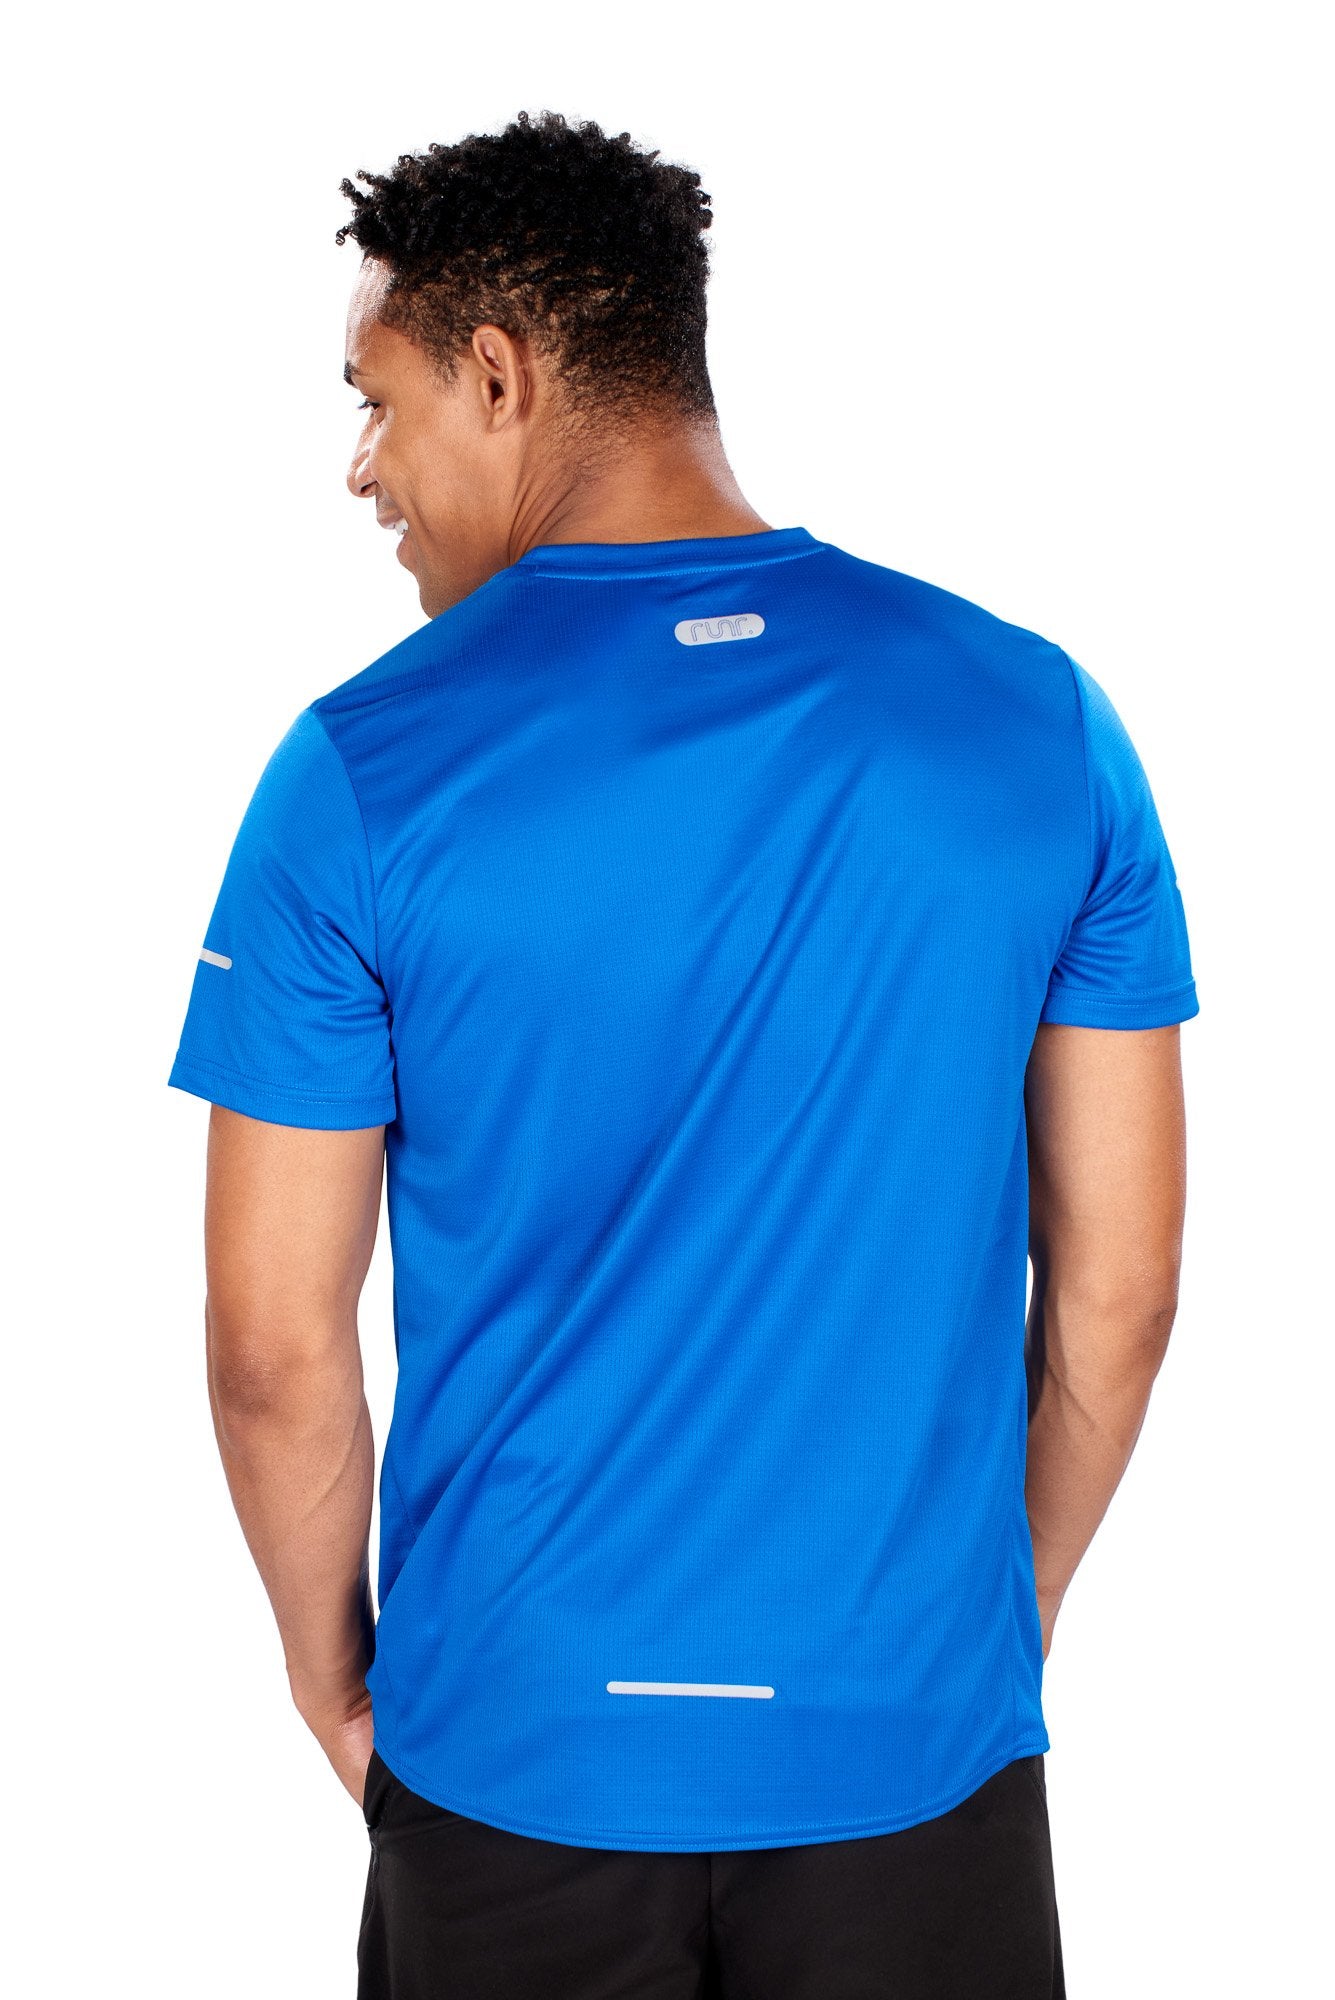 Men's EcoTek Runr Technical T-Shirt - Electric Blue